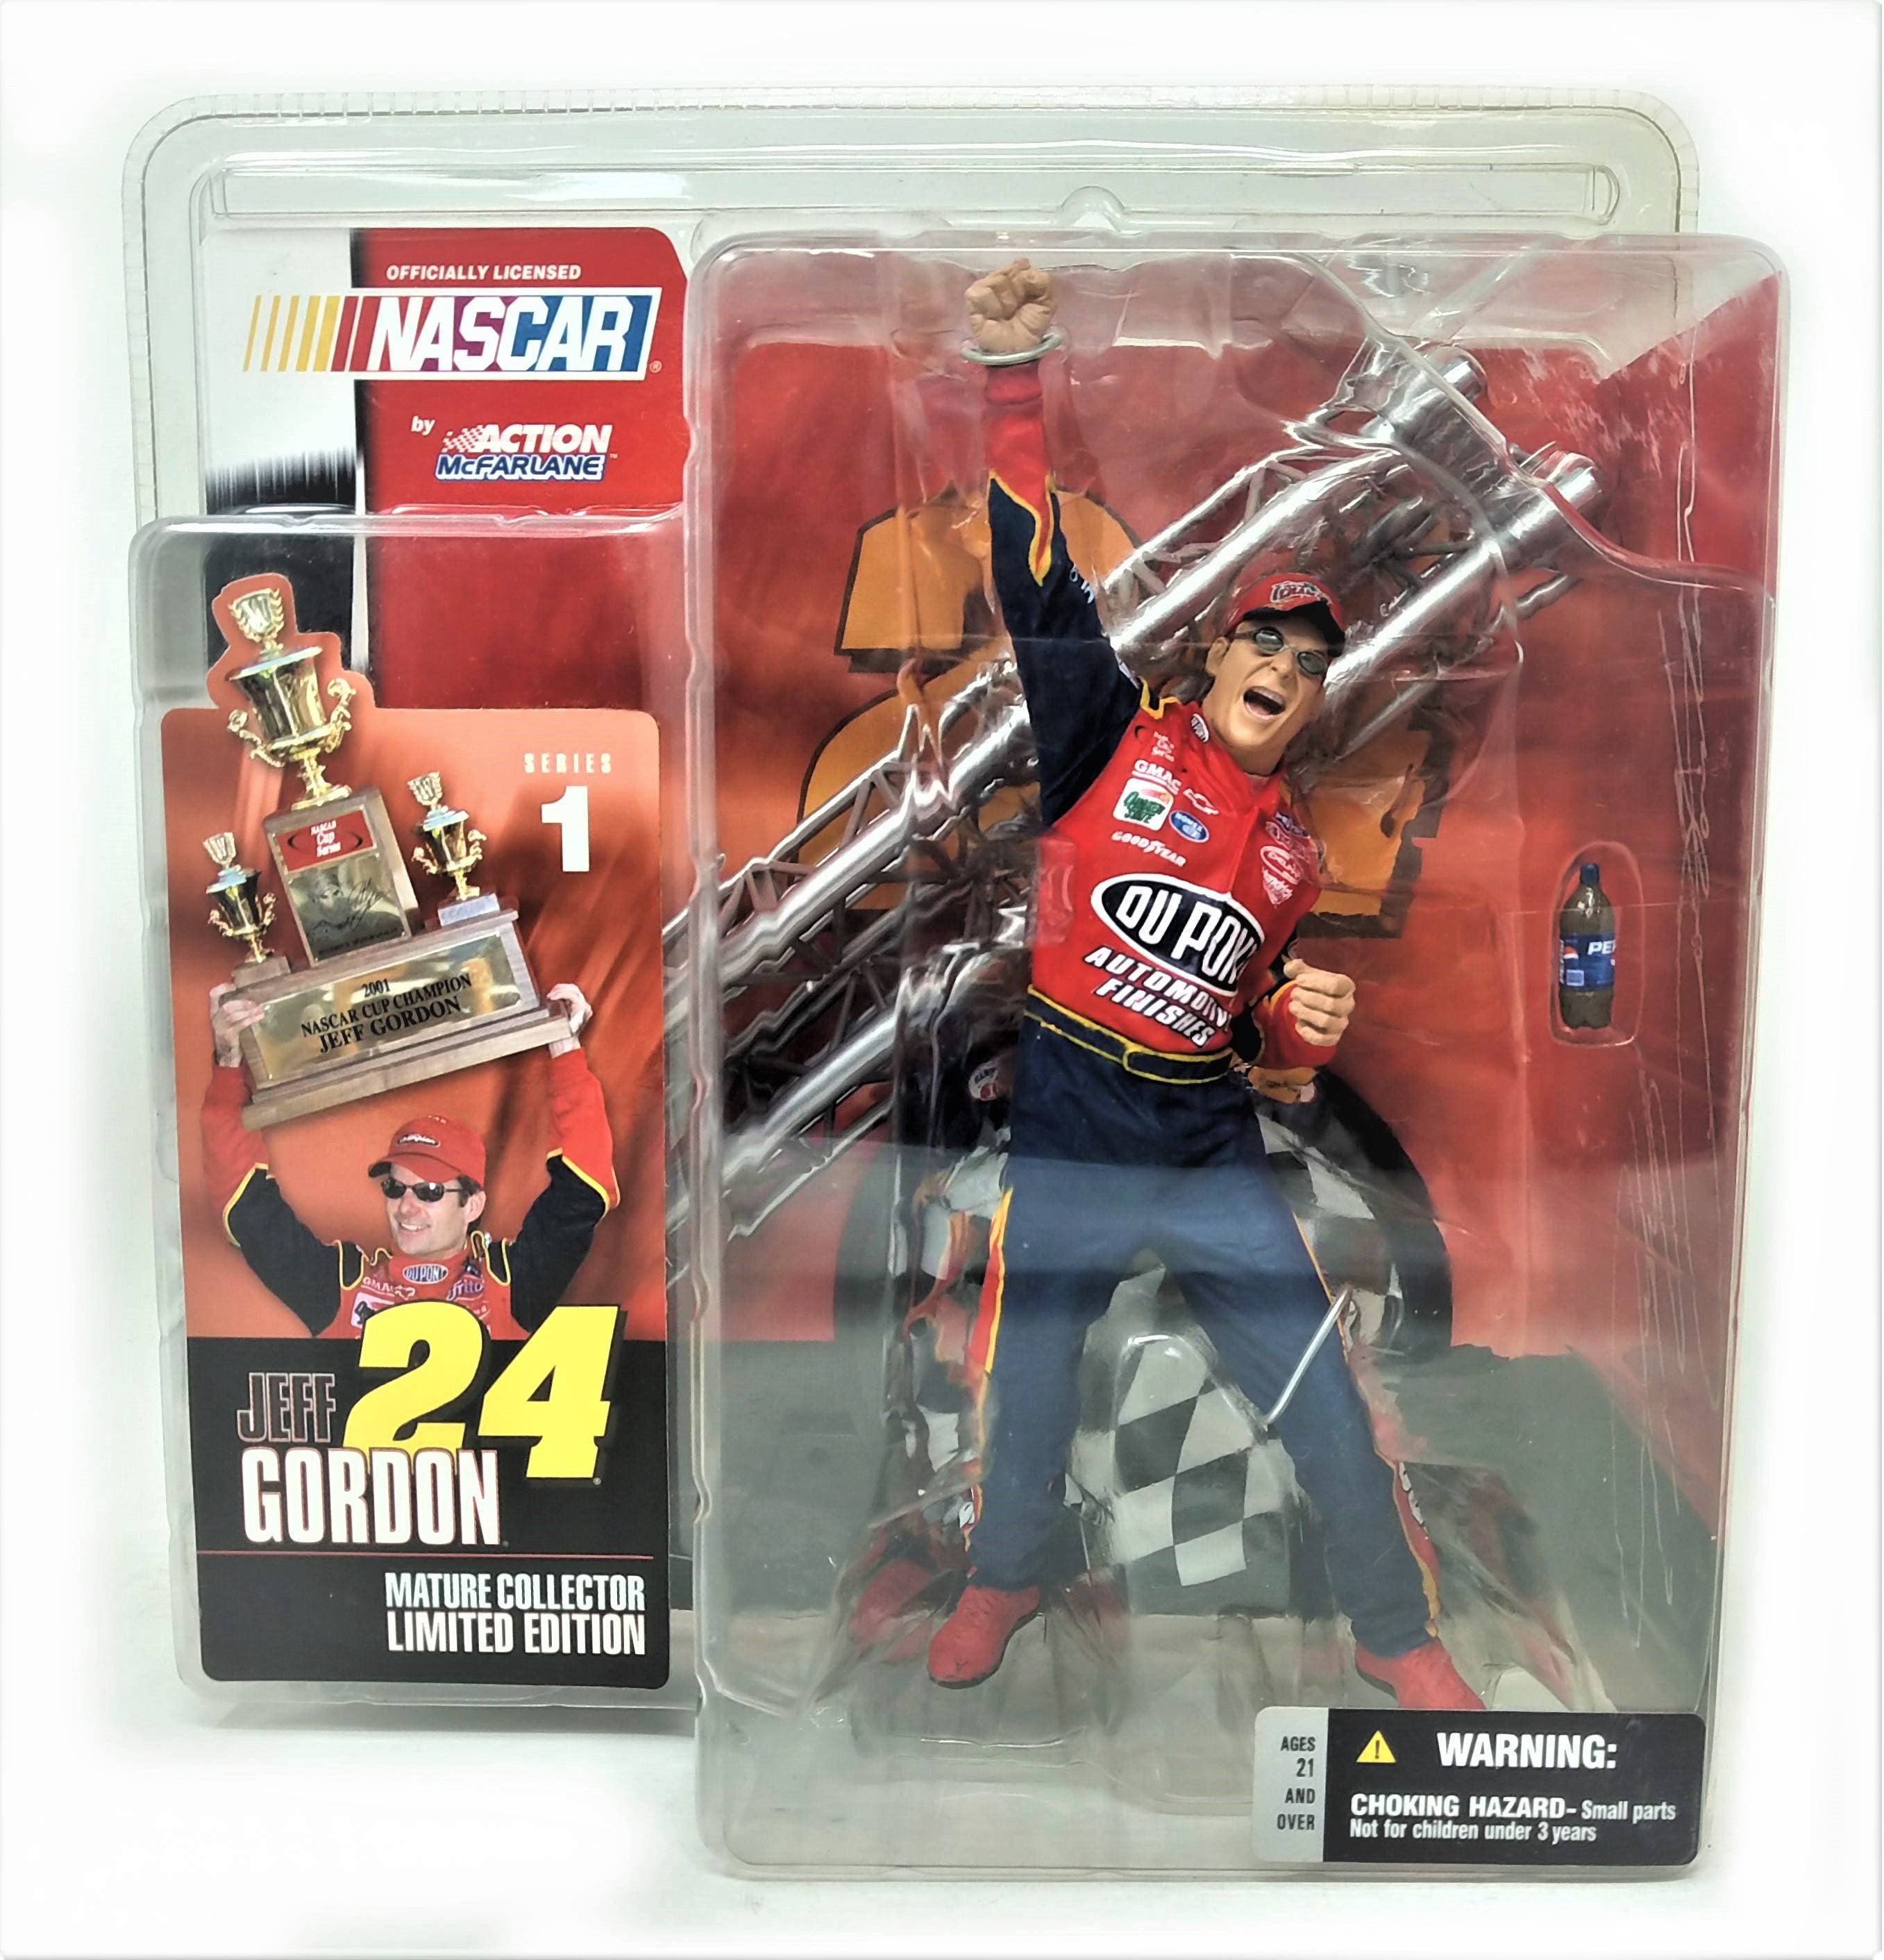 Nascar Jeff Gordon #24 Action McFarlane Mature Collector's Limited Edition 1 Figurine (LAST PIECE!) - Miraj Trading